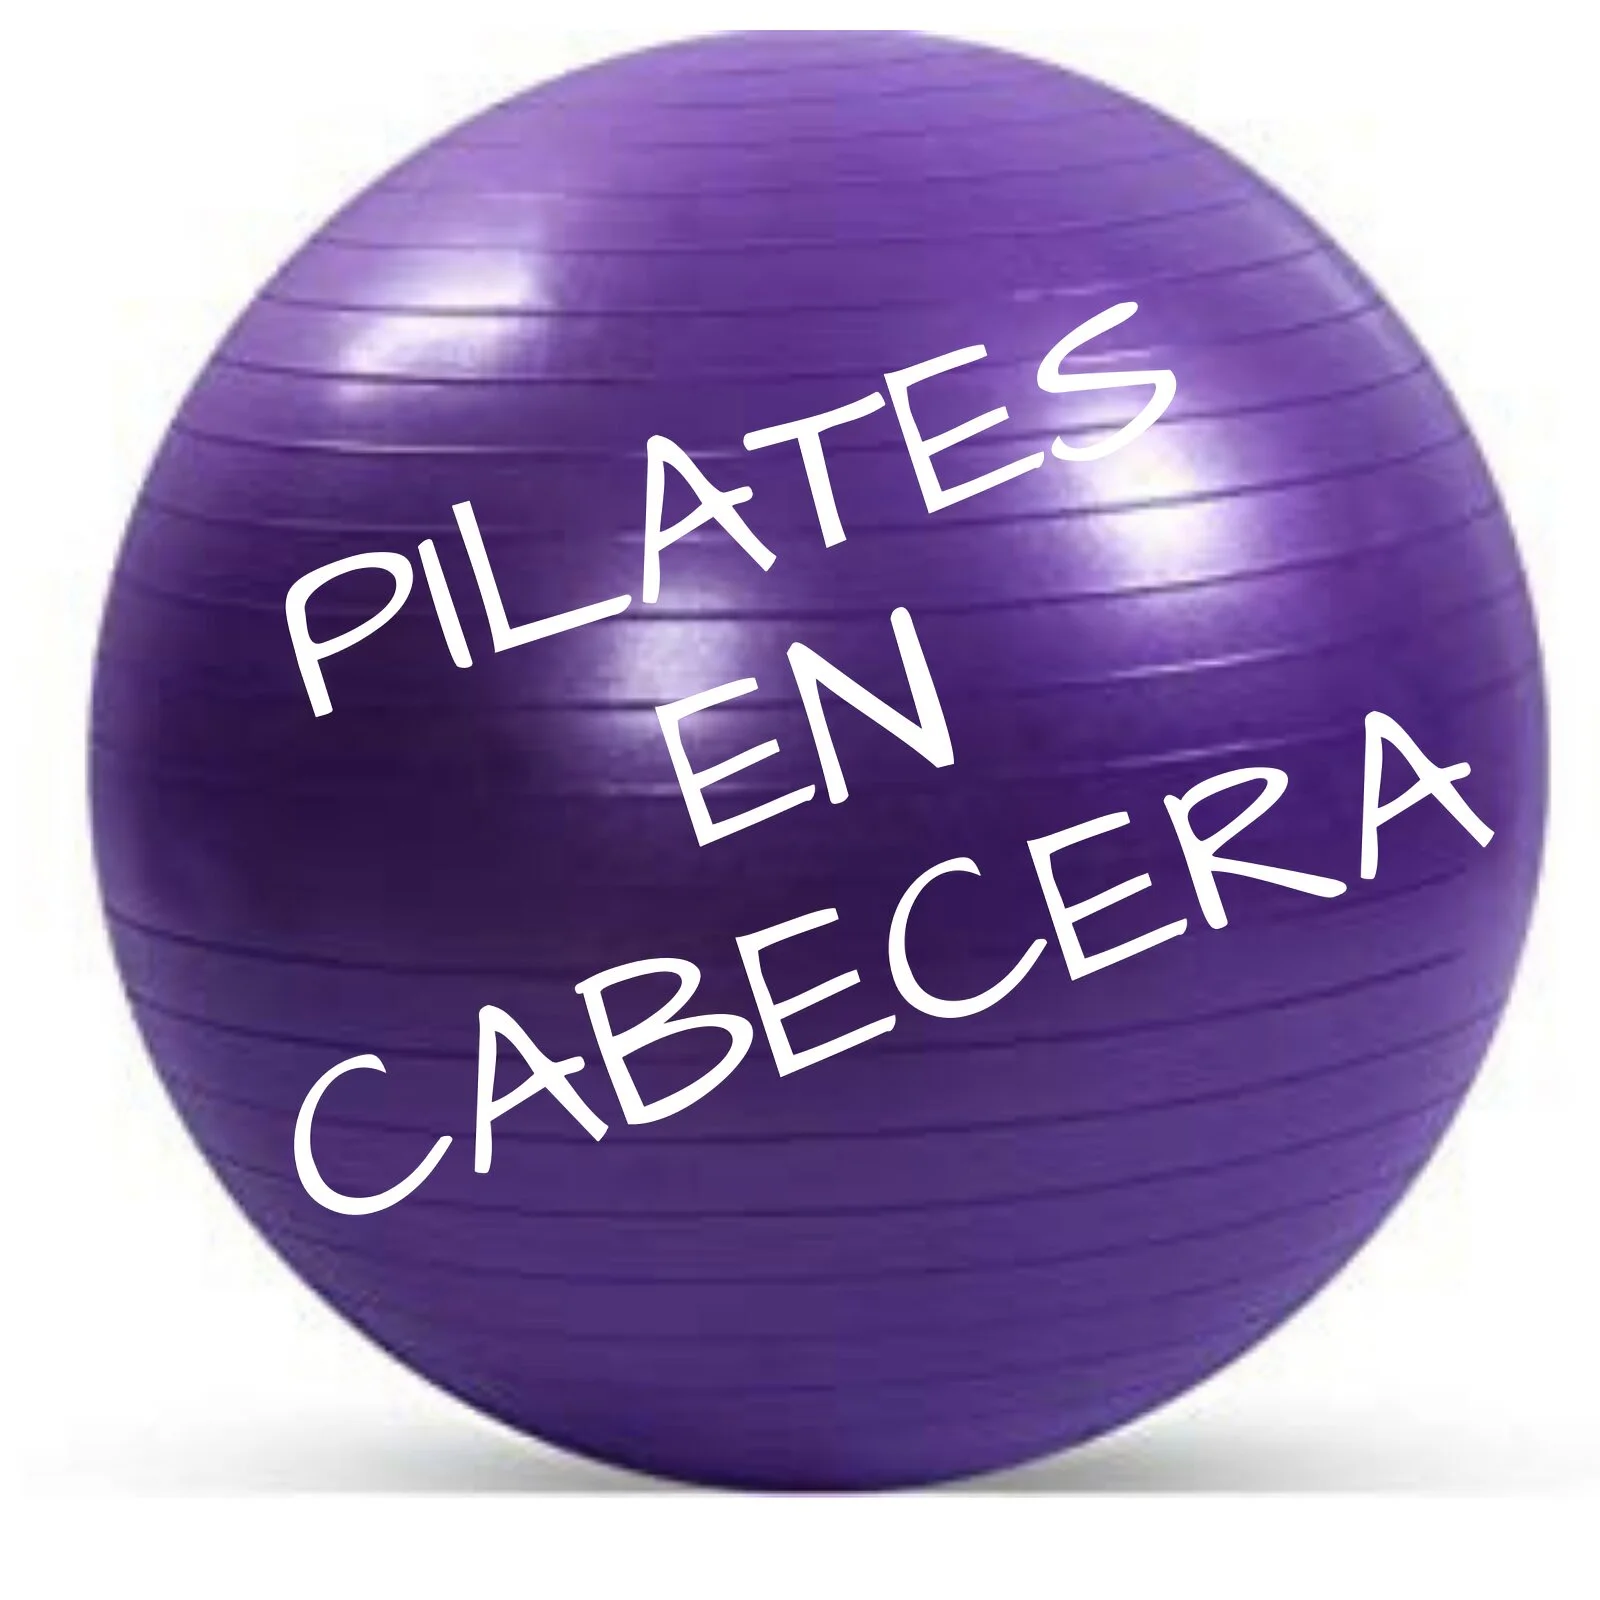 Pilates en Cabecera-1345